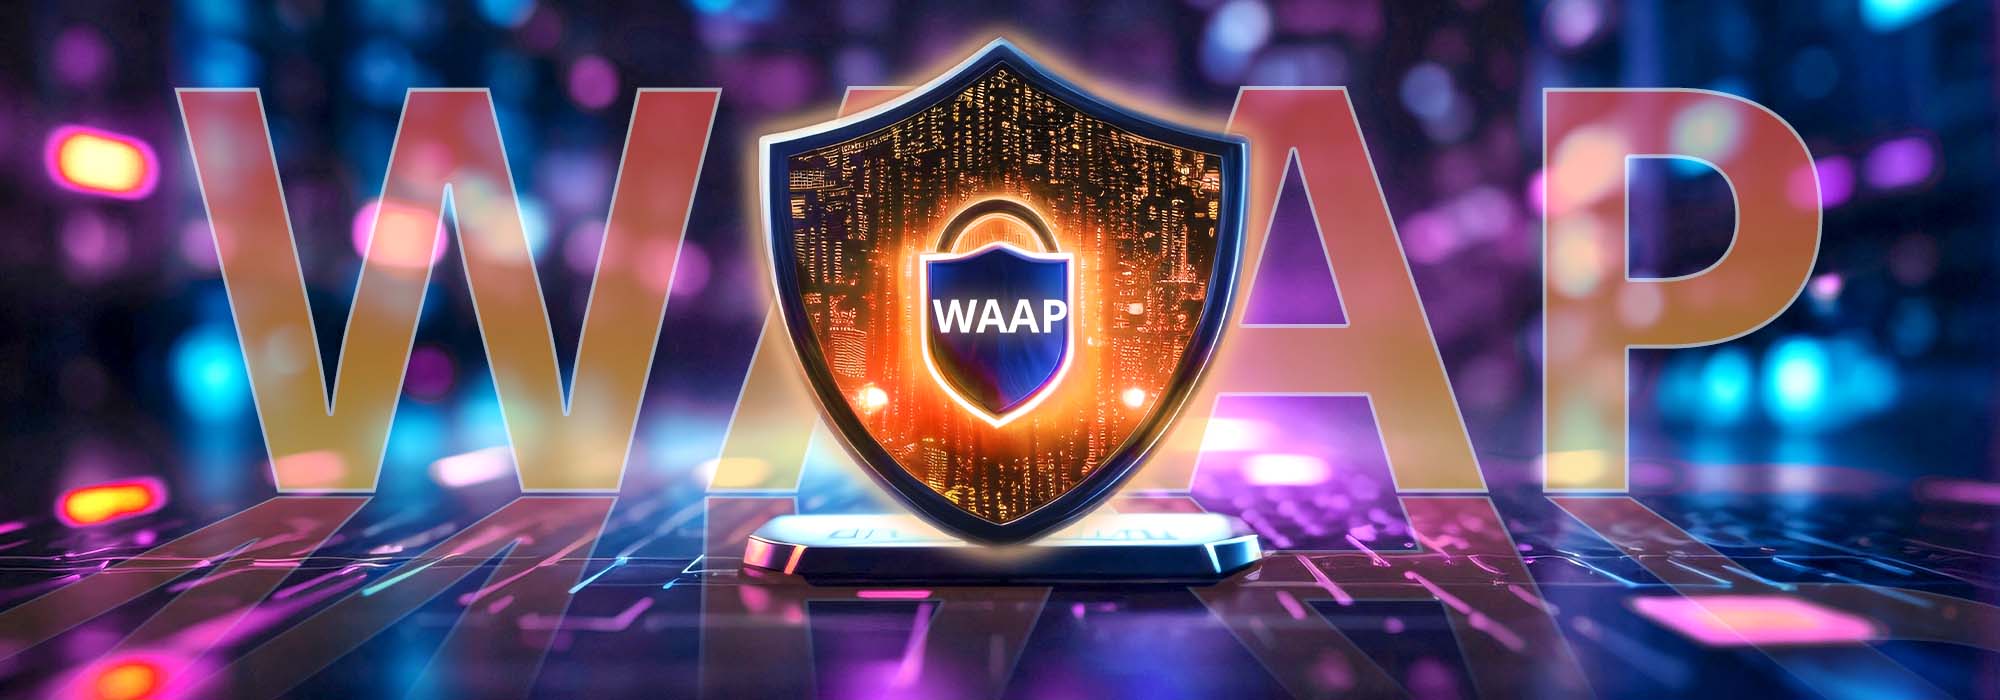 CDNetworks, 최신 AI 기반 클라우드 보안 2.0 플랫폼과 향상된 적응형 보호 기능으로 WAAP 솔루션 업그레이드